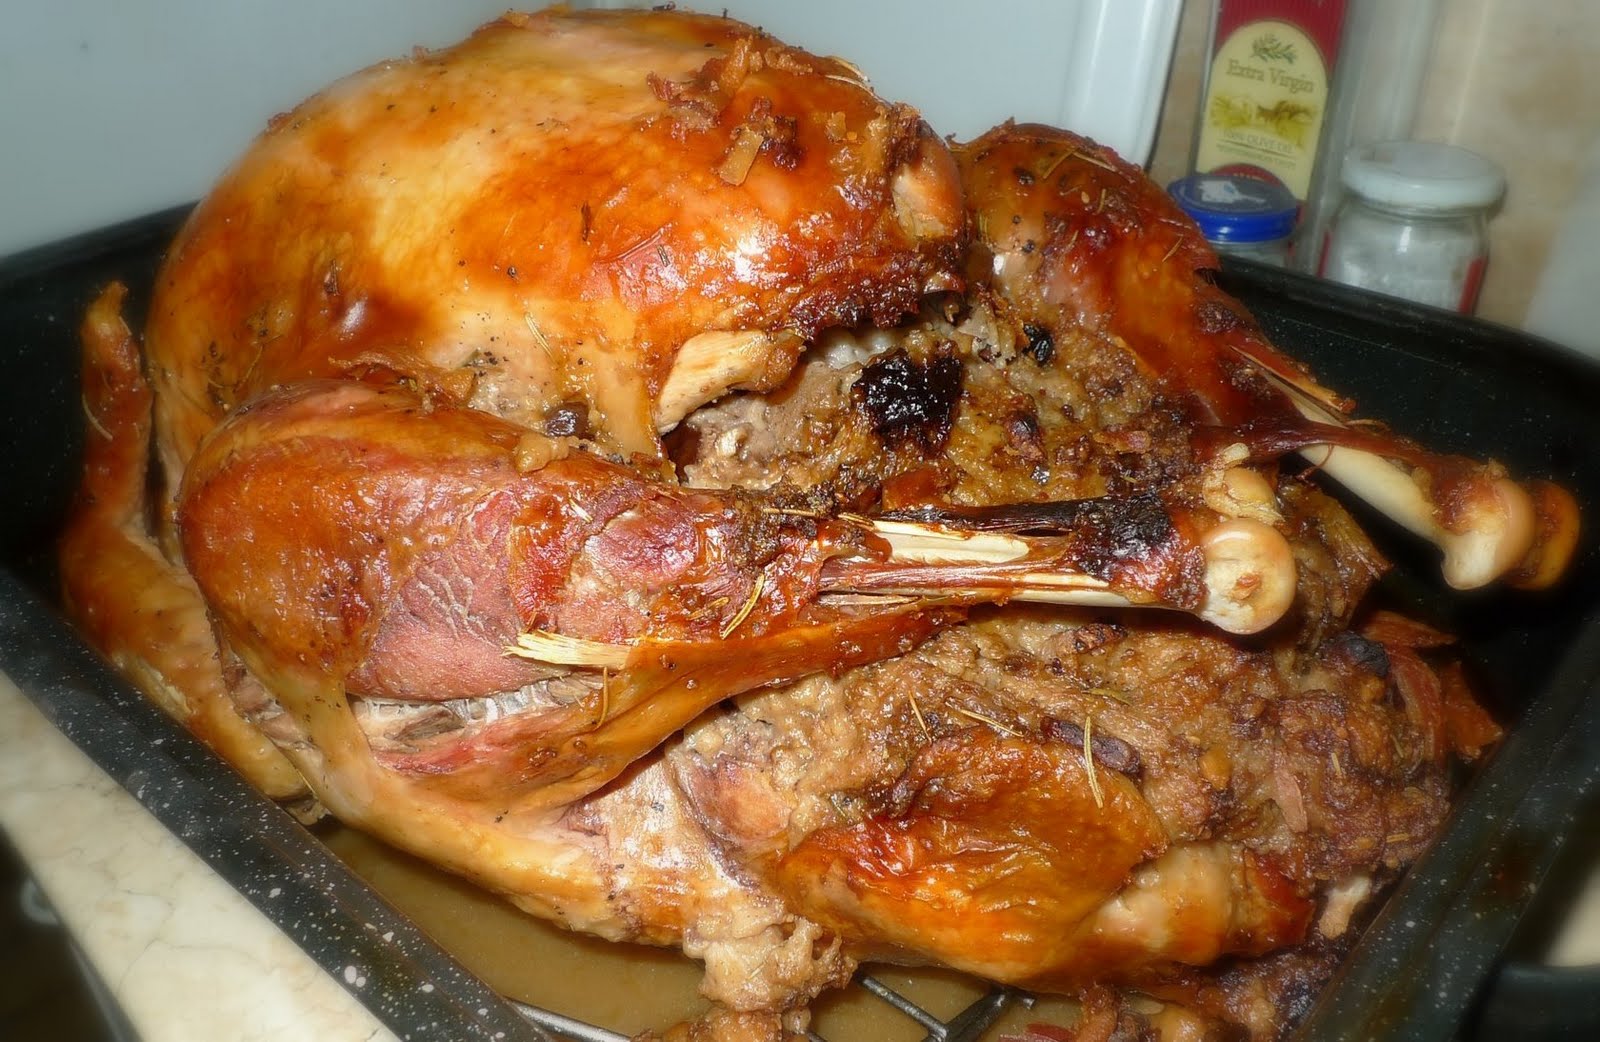 I AM A FOODIE: Roast Turkey with Stuffing